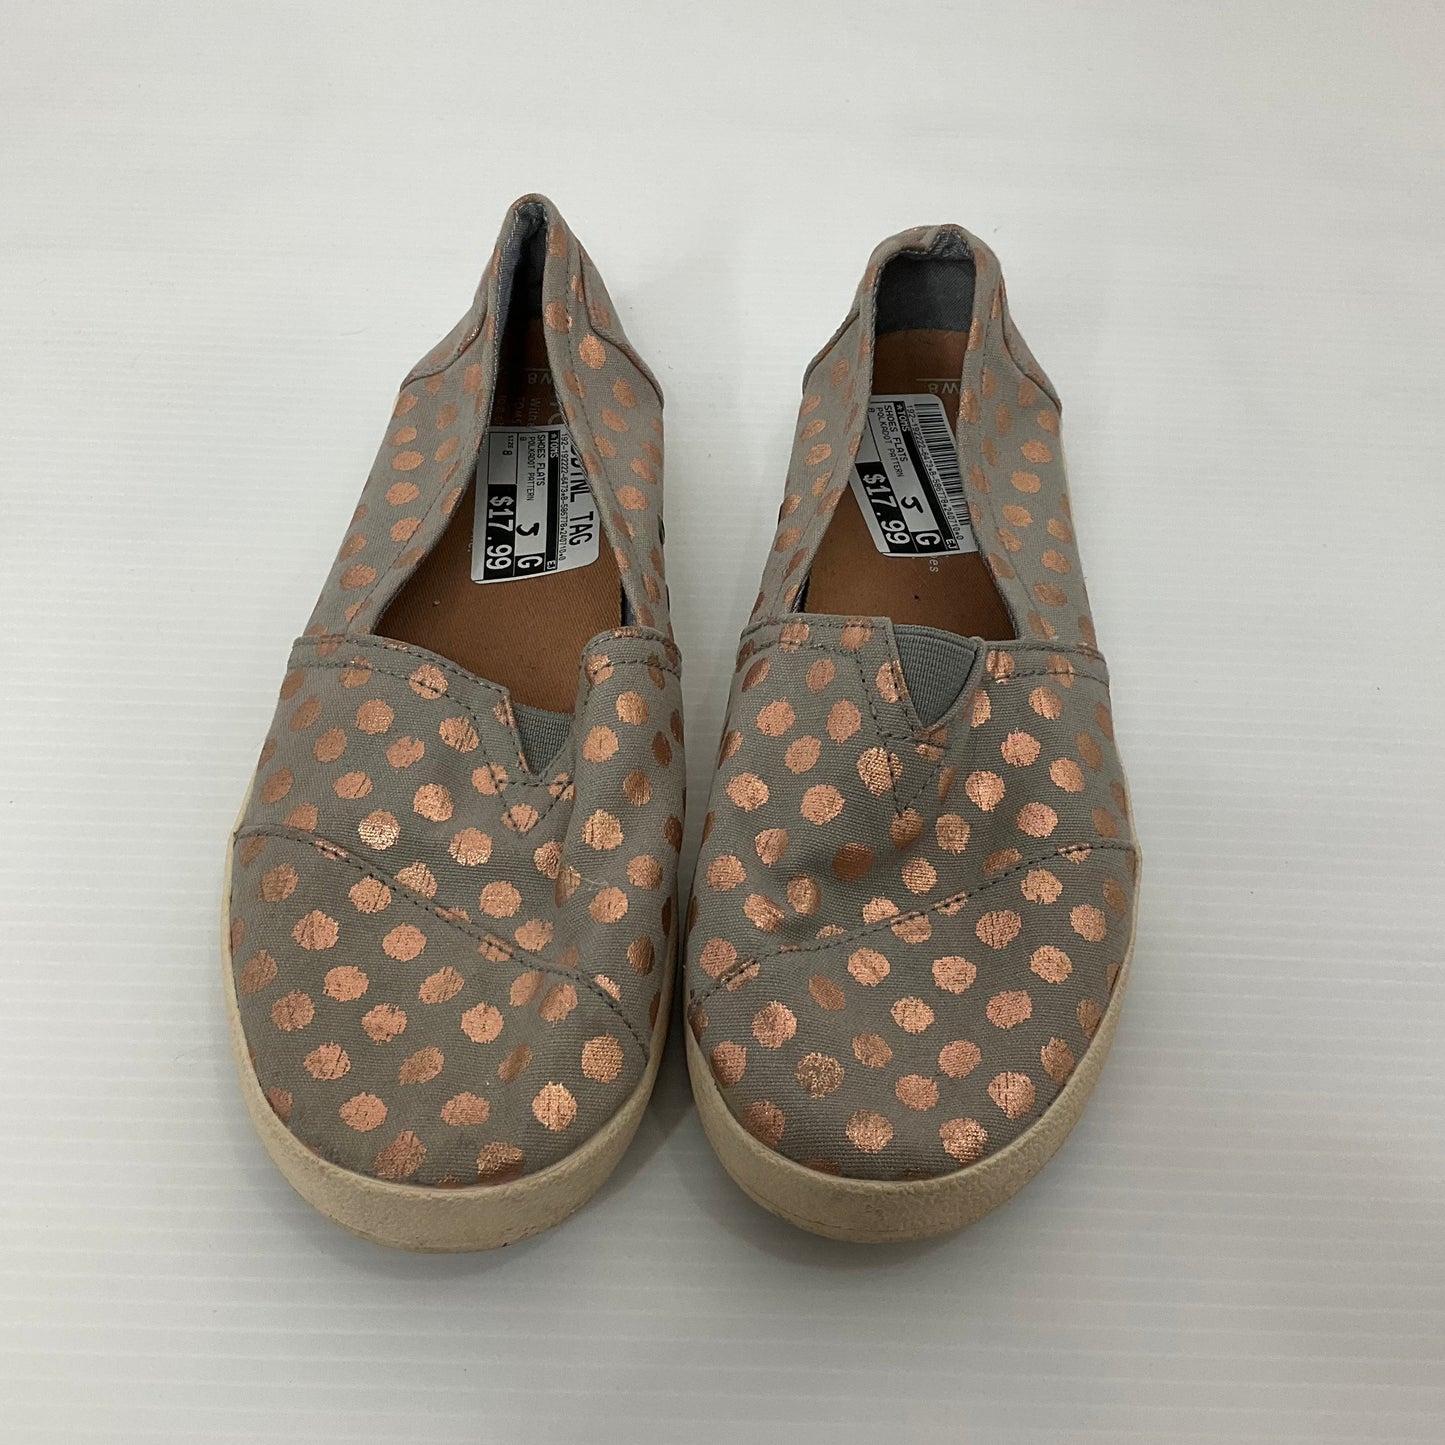 Polkadot Pattern Shoes Flats Toms, Size 8